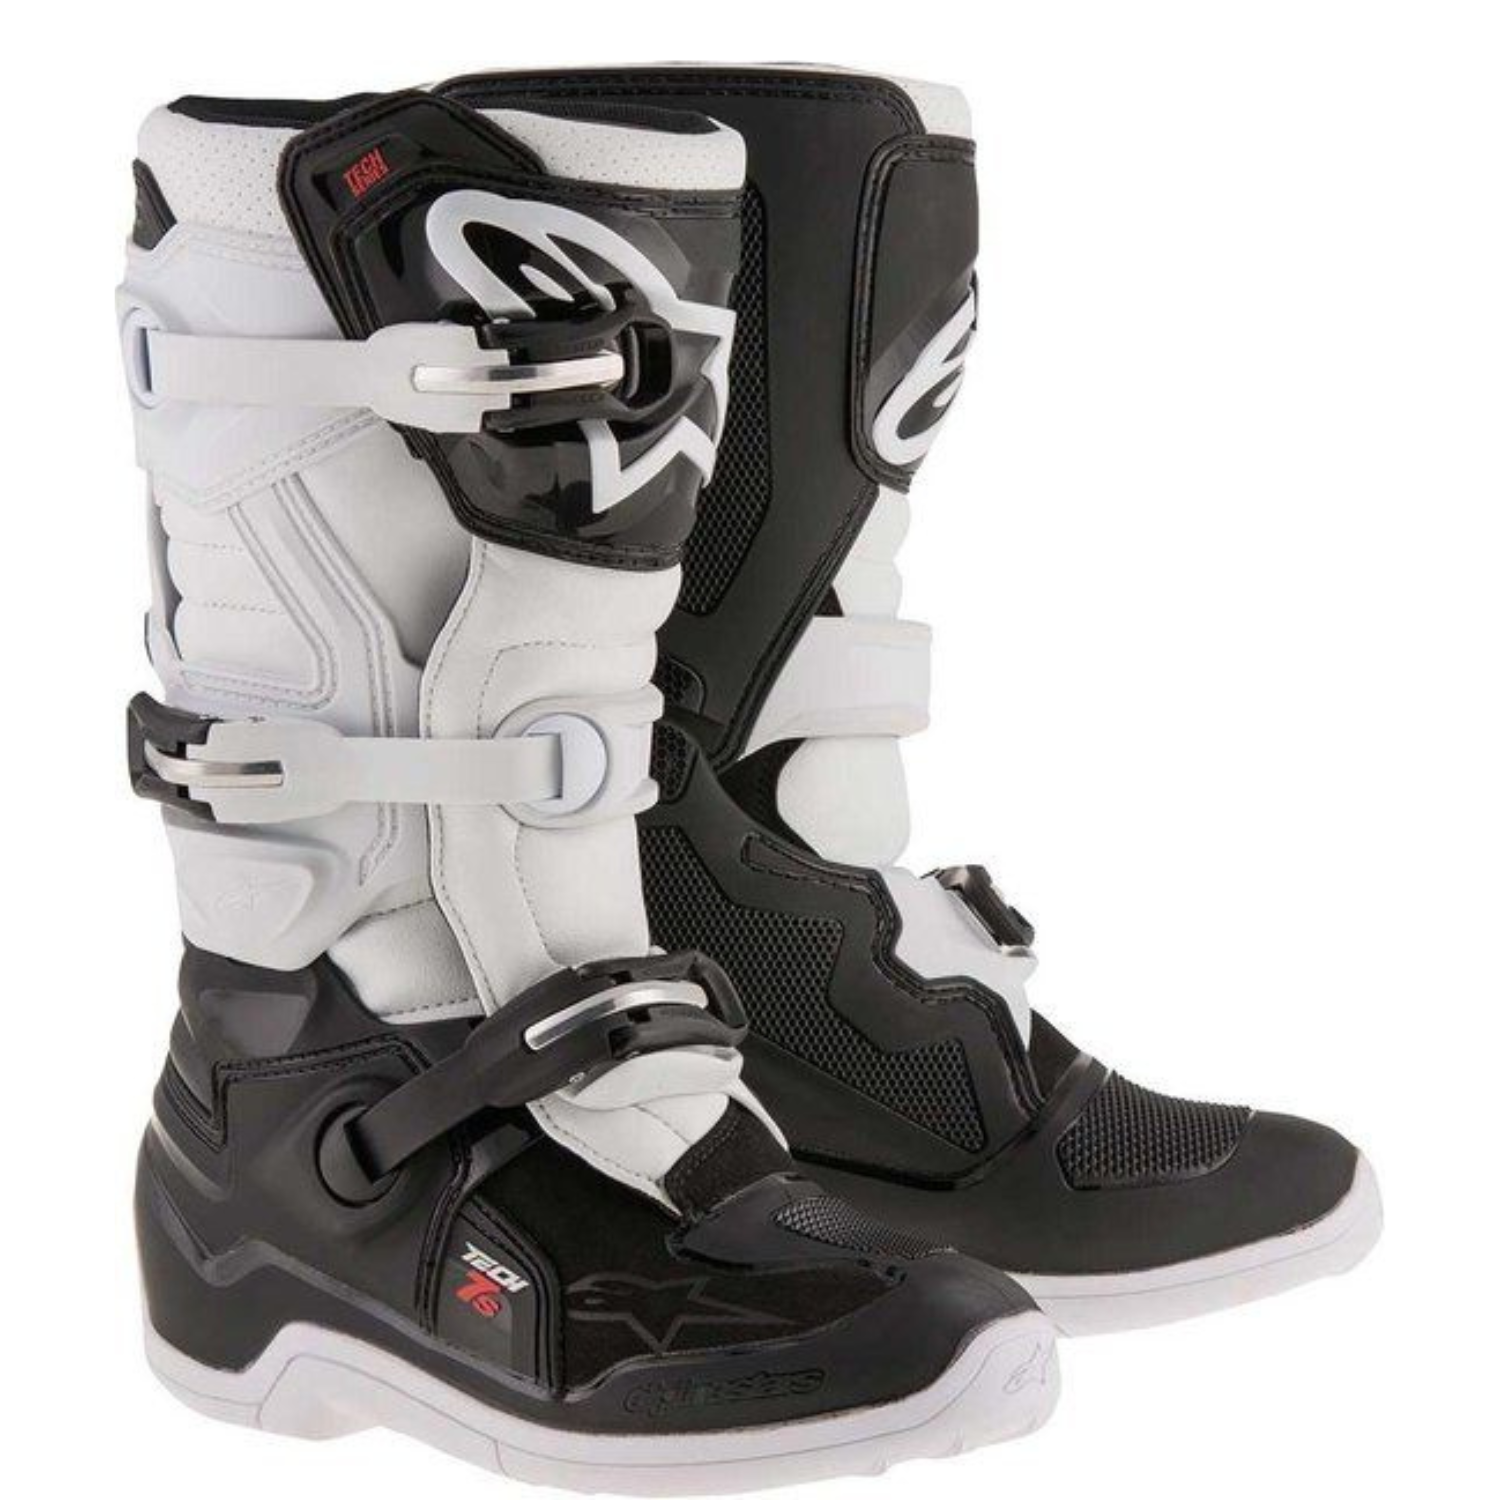 Image of Alpinestars Tech 7 S Black White Boots Size US 8 EN